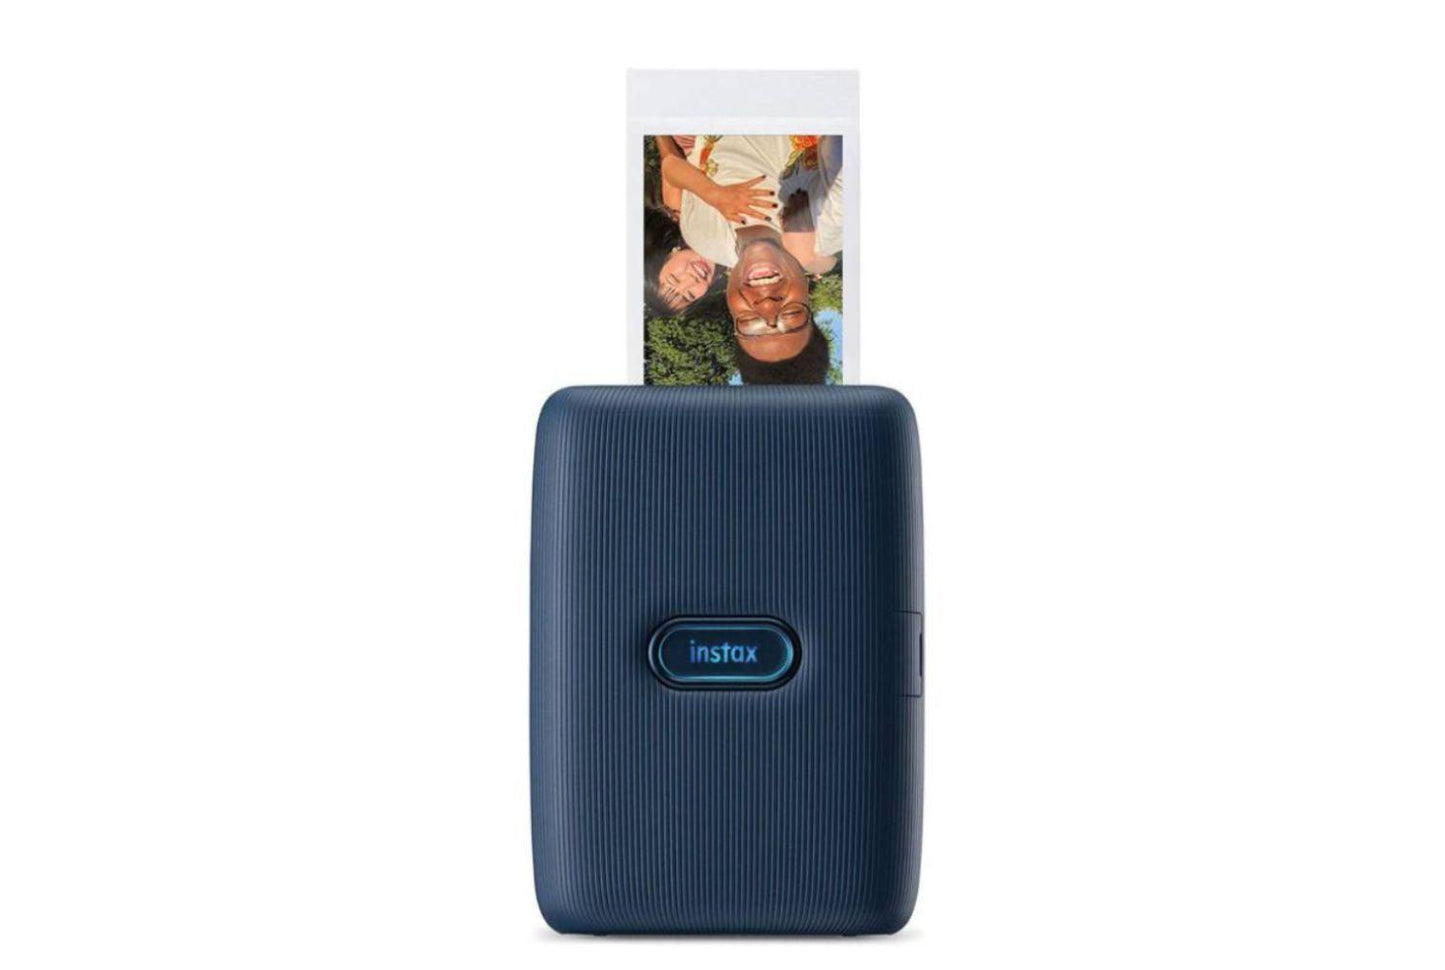 Fujifilm Instax Mini Link 2 - Impresora para Smartphone, Color Blanco